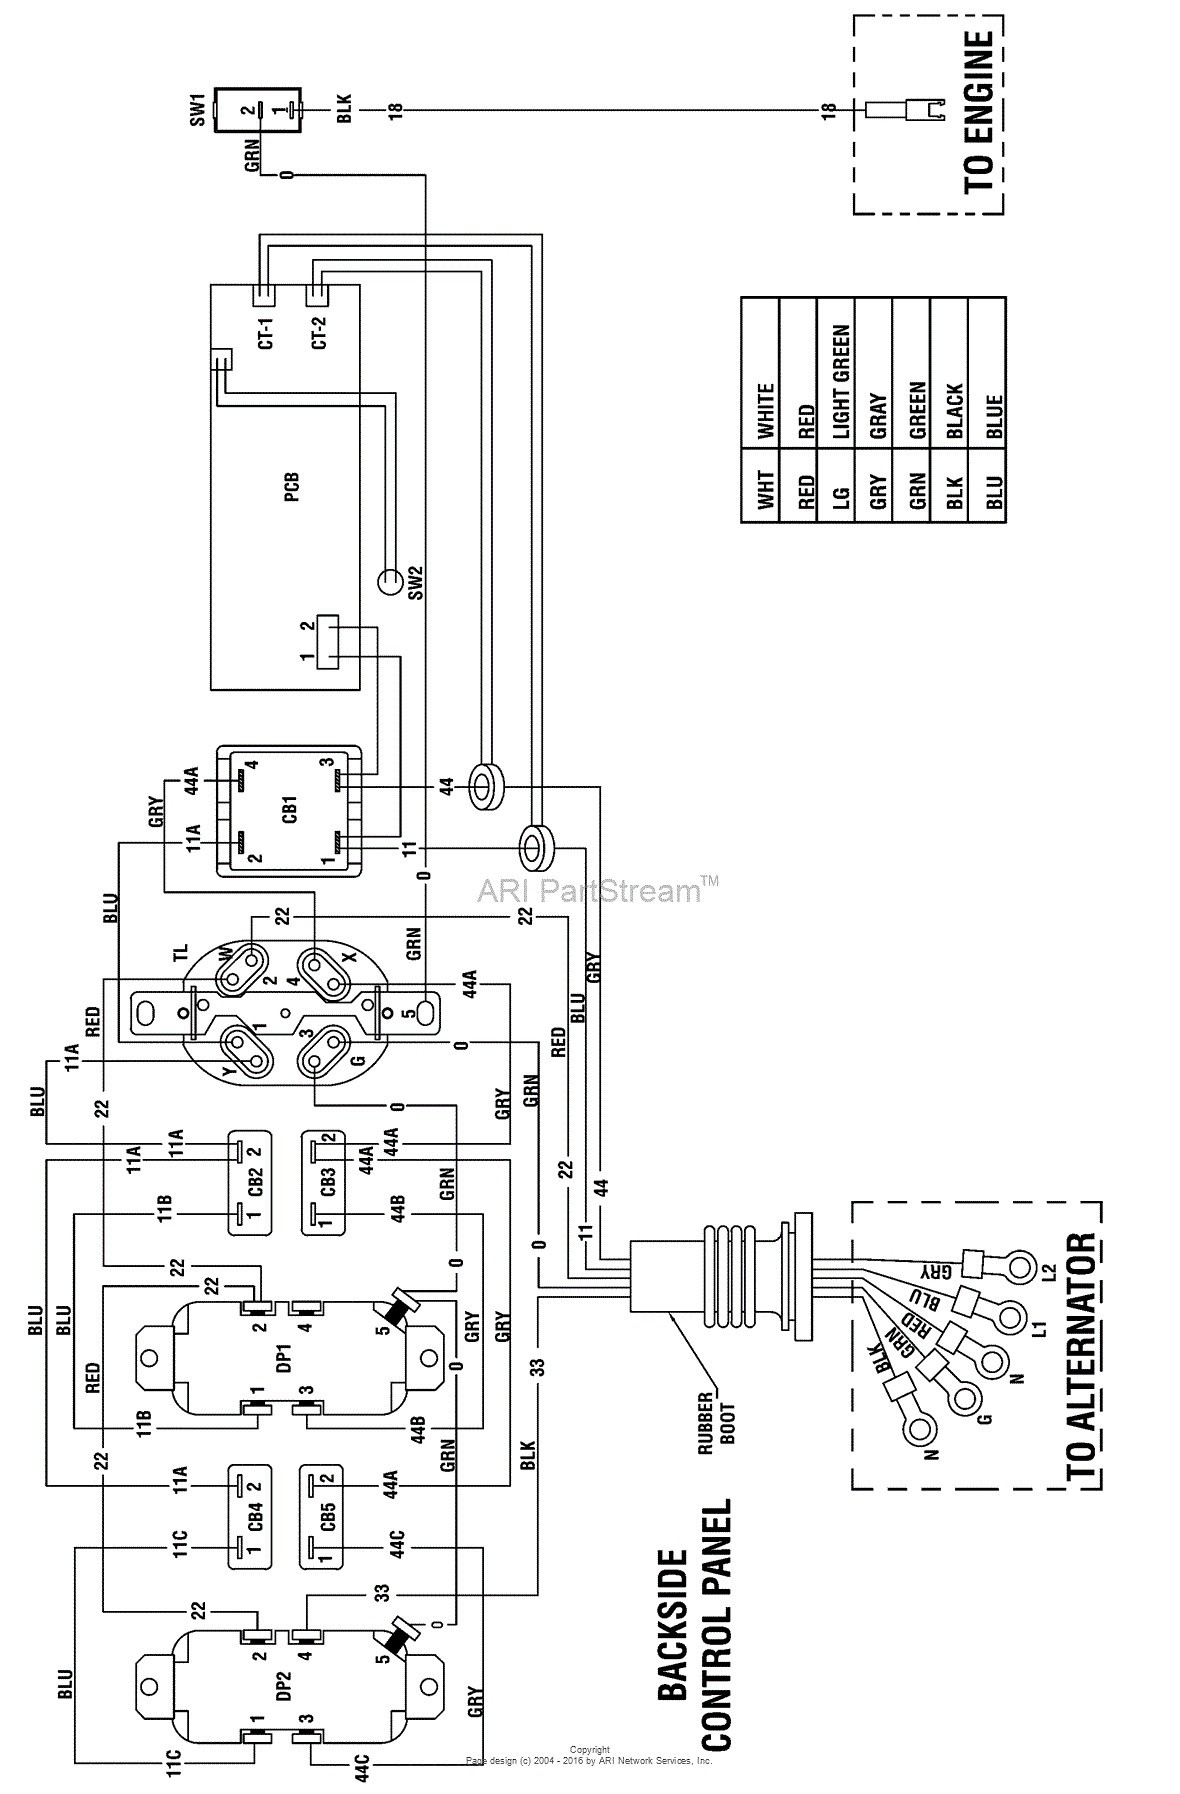 briggs and stratton wiring diagram chromatex of briggs and stratton ignition coil wiring diagram